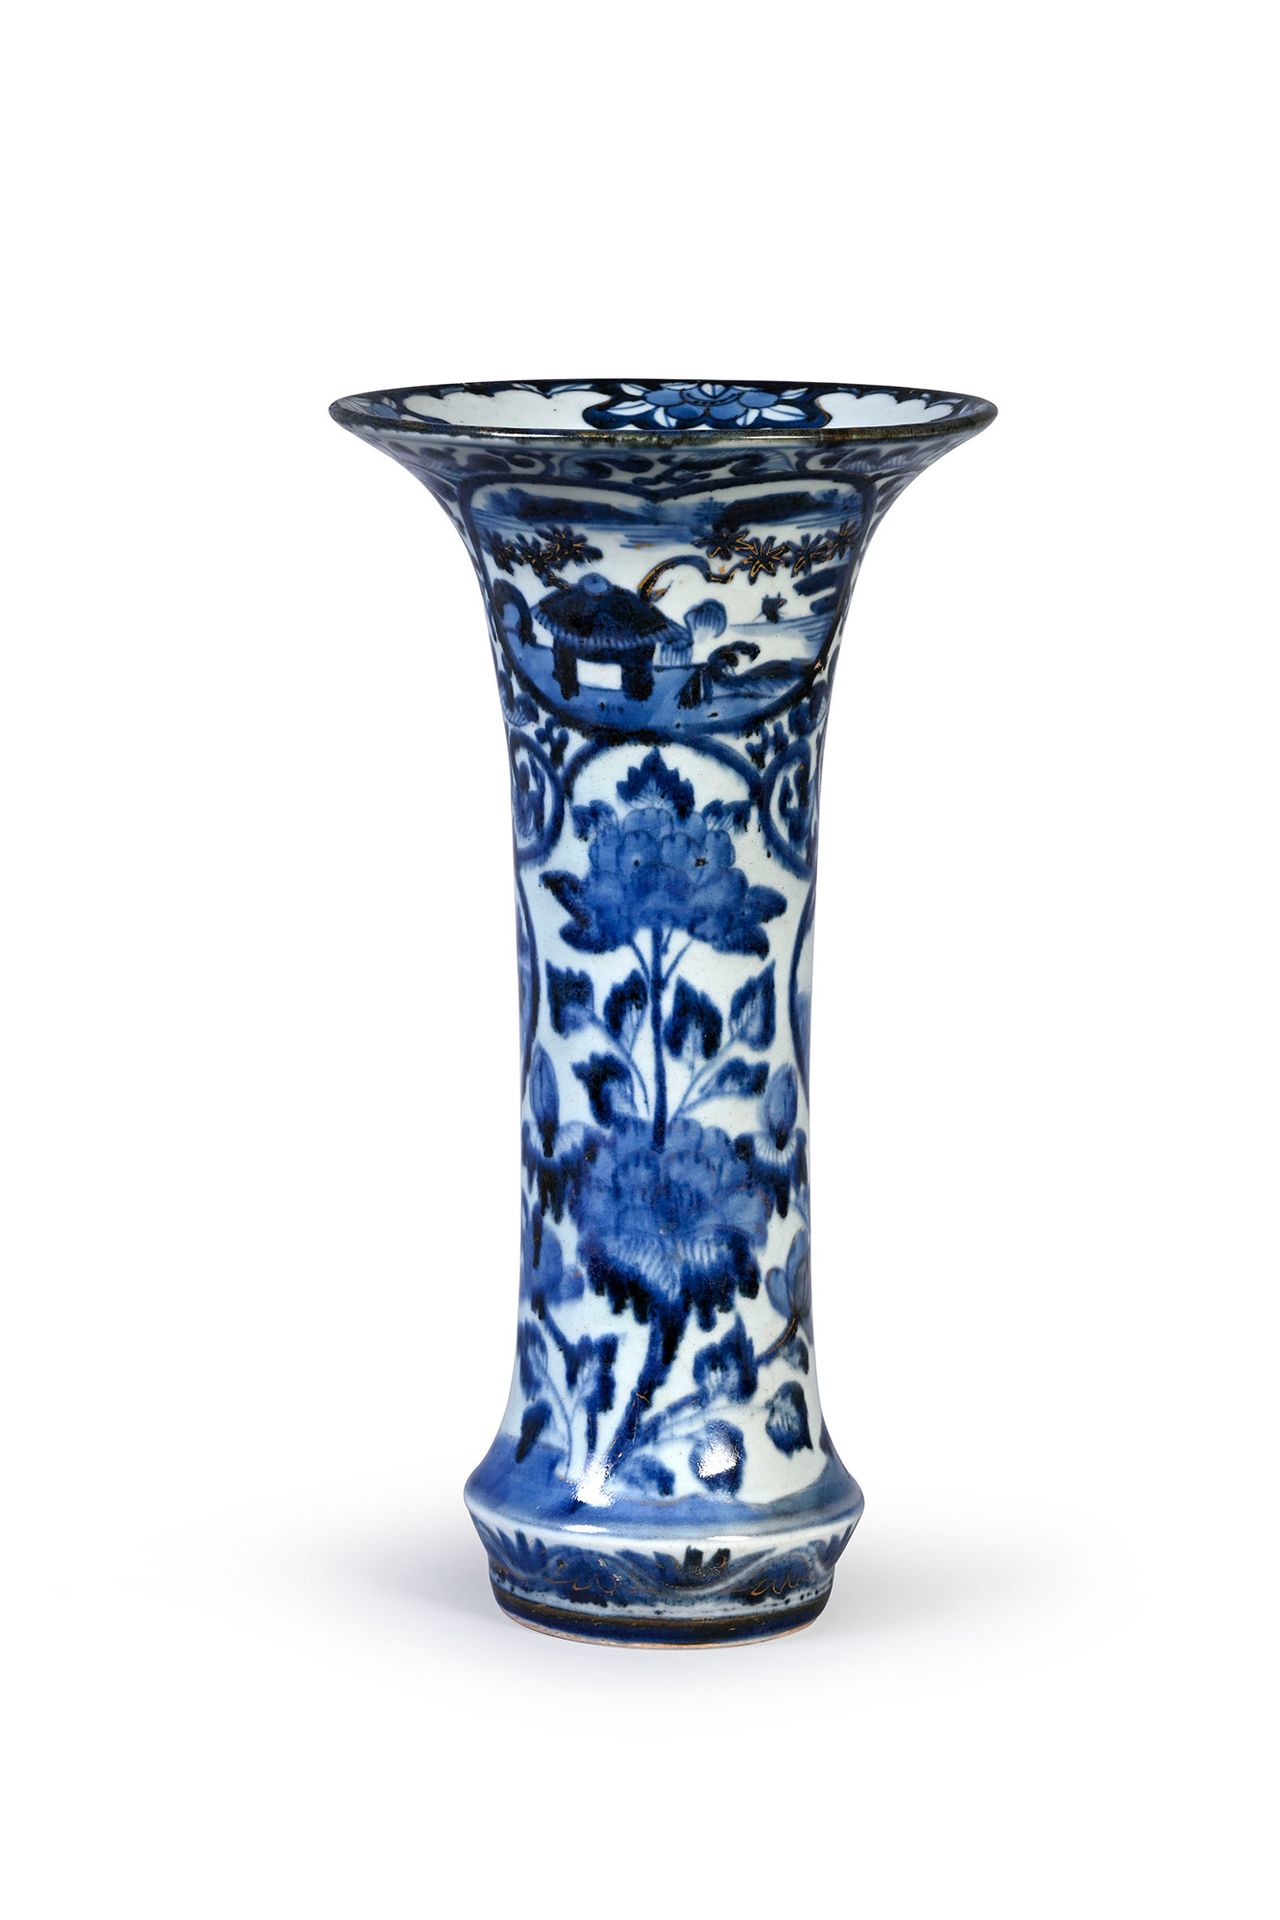 JAPON, Fours de Arita, XVIIe siècle 有田瓷器花瓶
圆柱形的瓶身和宽大的颈部在开口处呈喇叭状，在白底上用钴蓝色的装饰，并有金色&hellip;